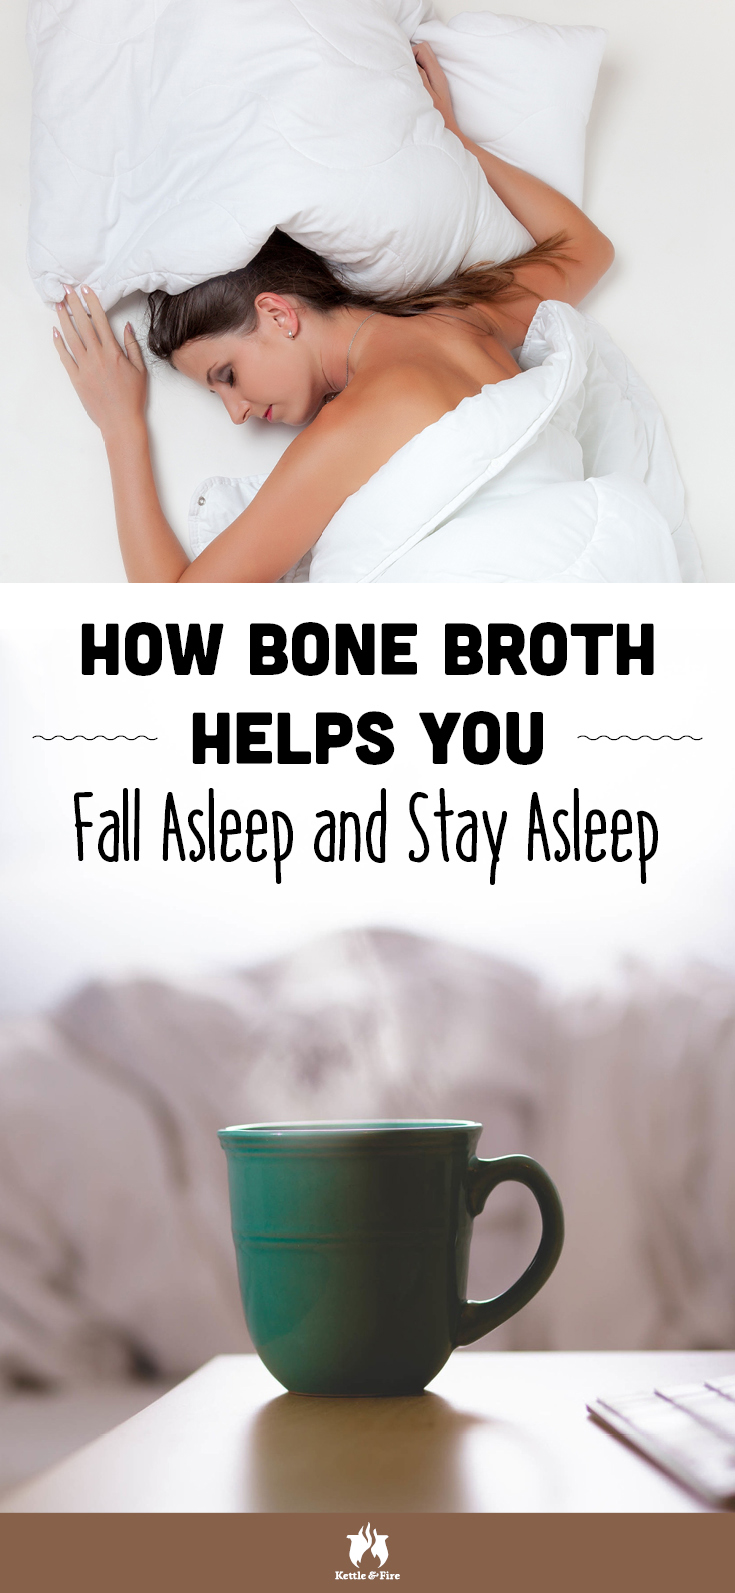 Bone broth: an amazing nighttime elixir that helps you relax, fall asleep and stay asleep.